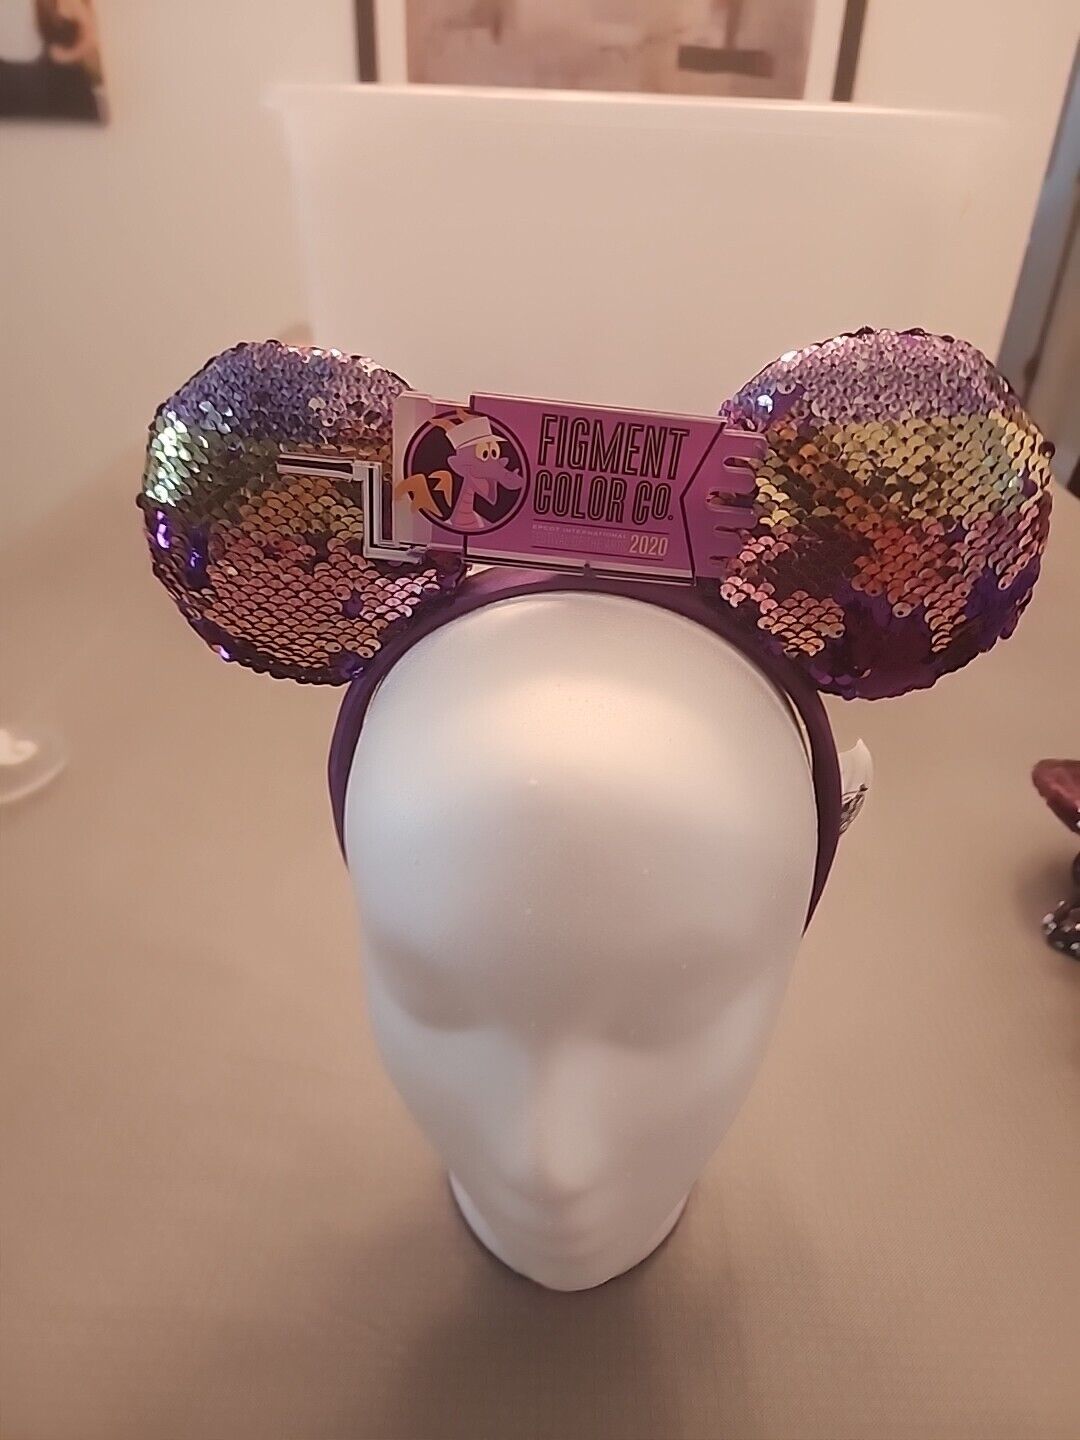 Figment Disney Parks Epcot Festival of Arts 2020 Color Co. Ears Headband NWT WDW